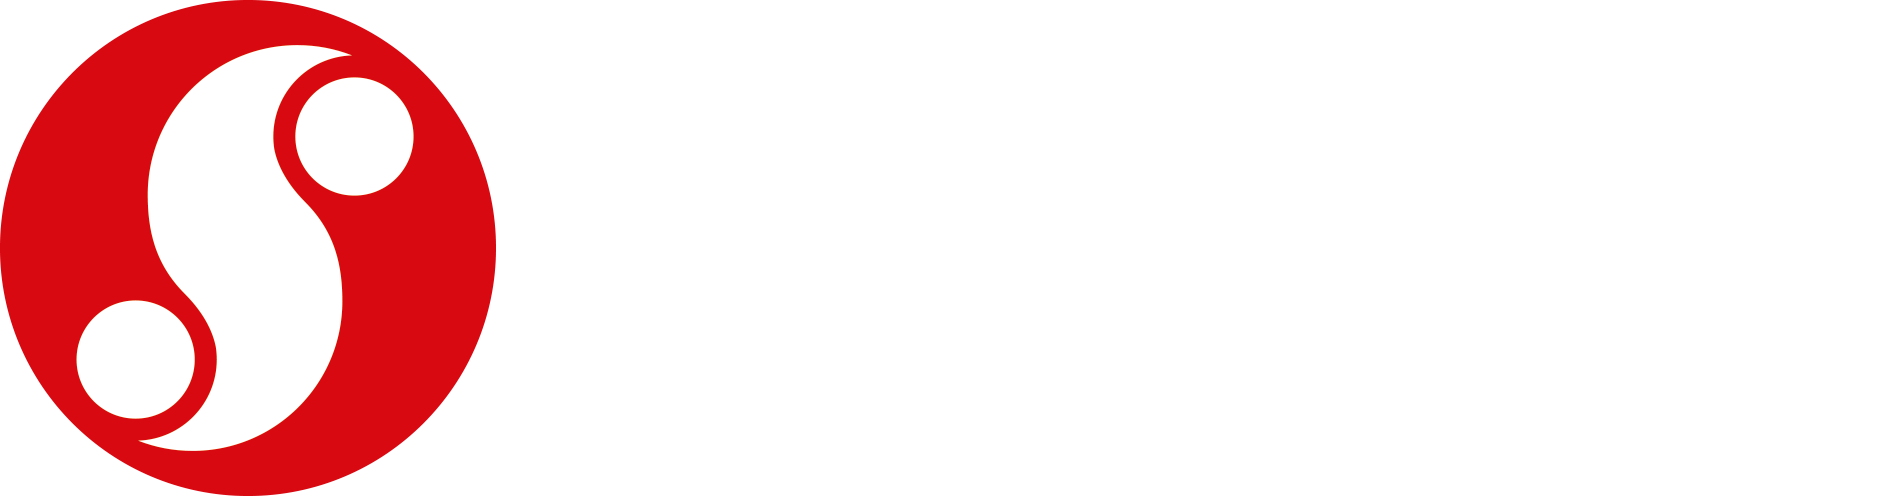 Schur logo